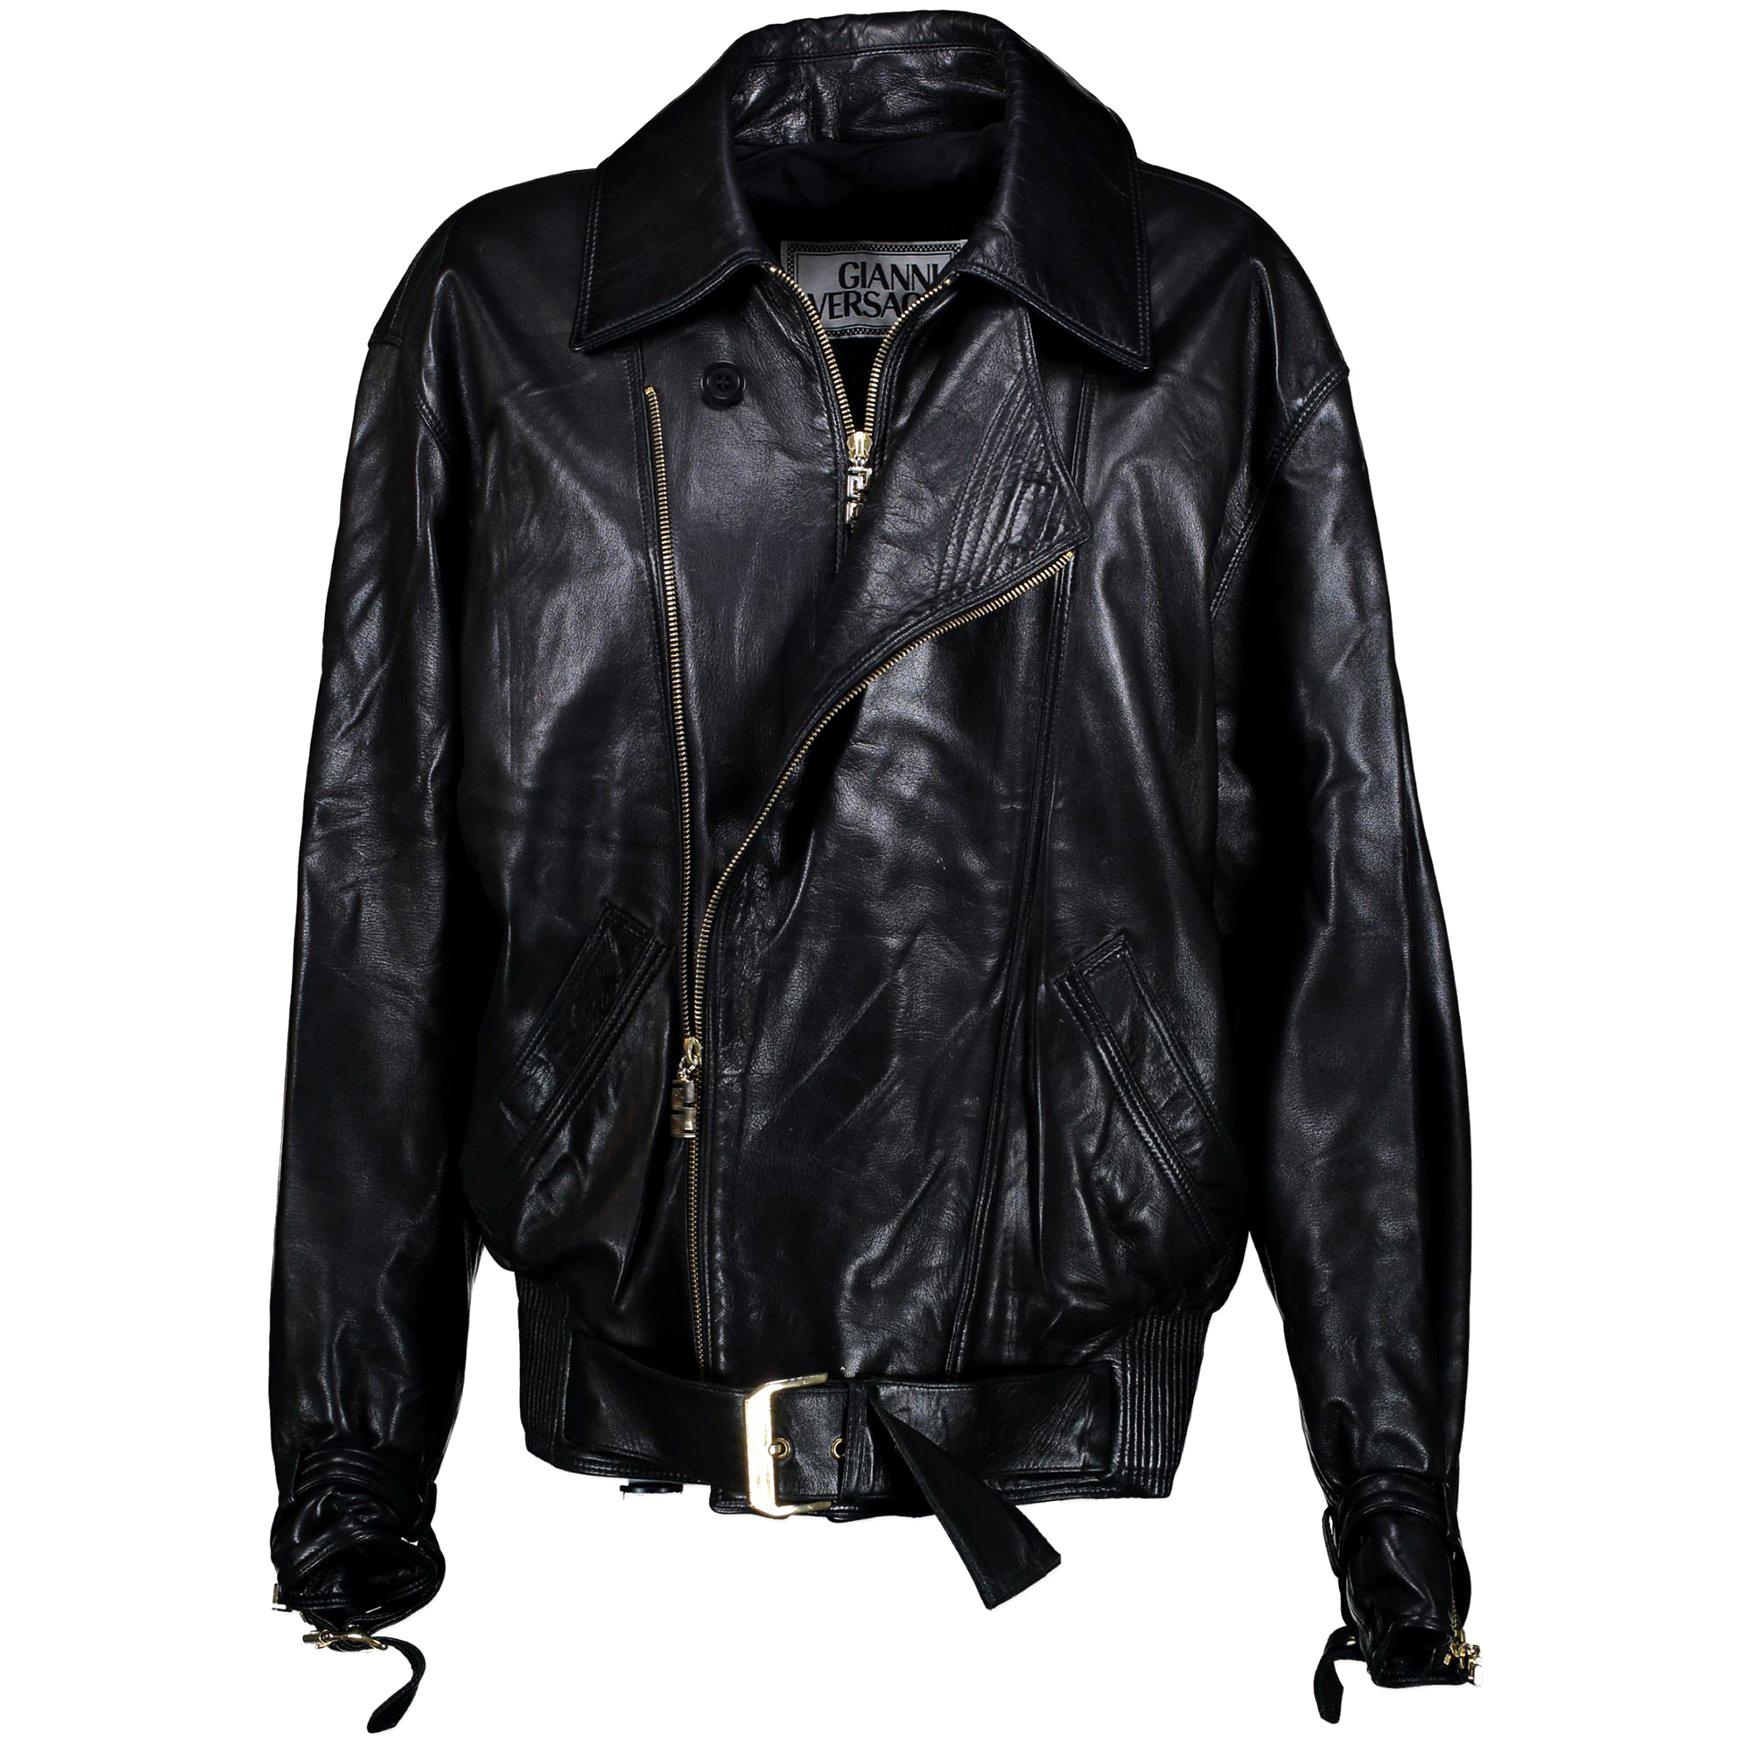 Gianni Versace Black Leather Motorcycle Jacket size M